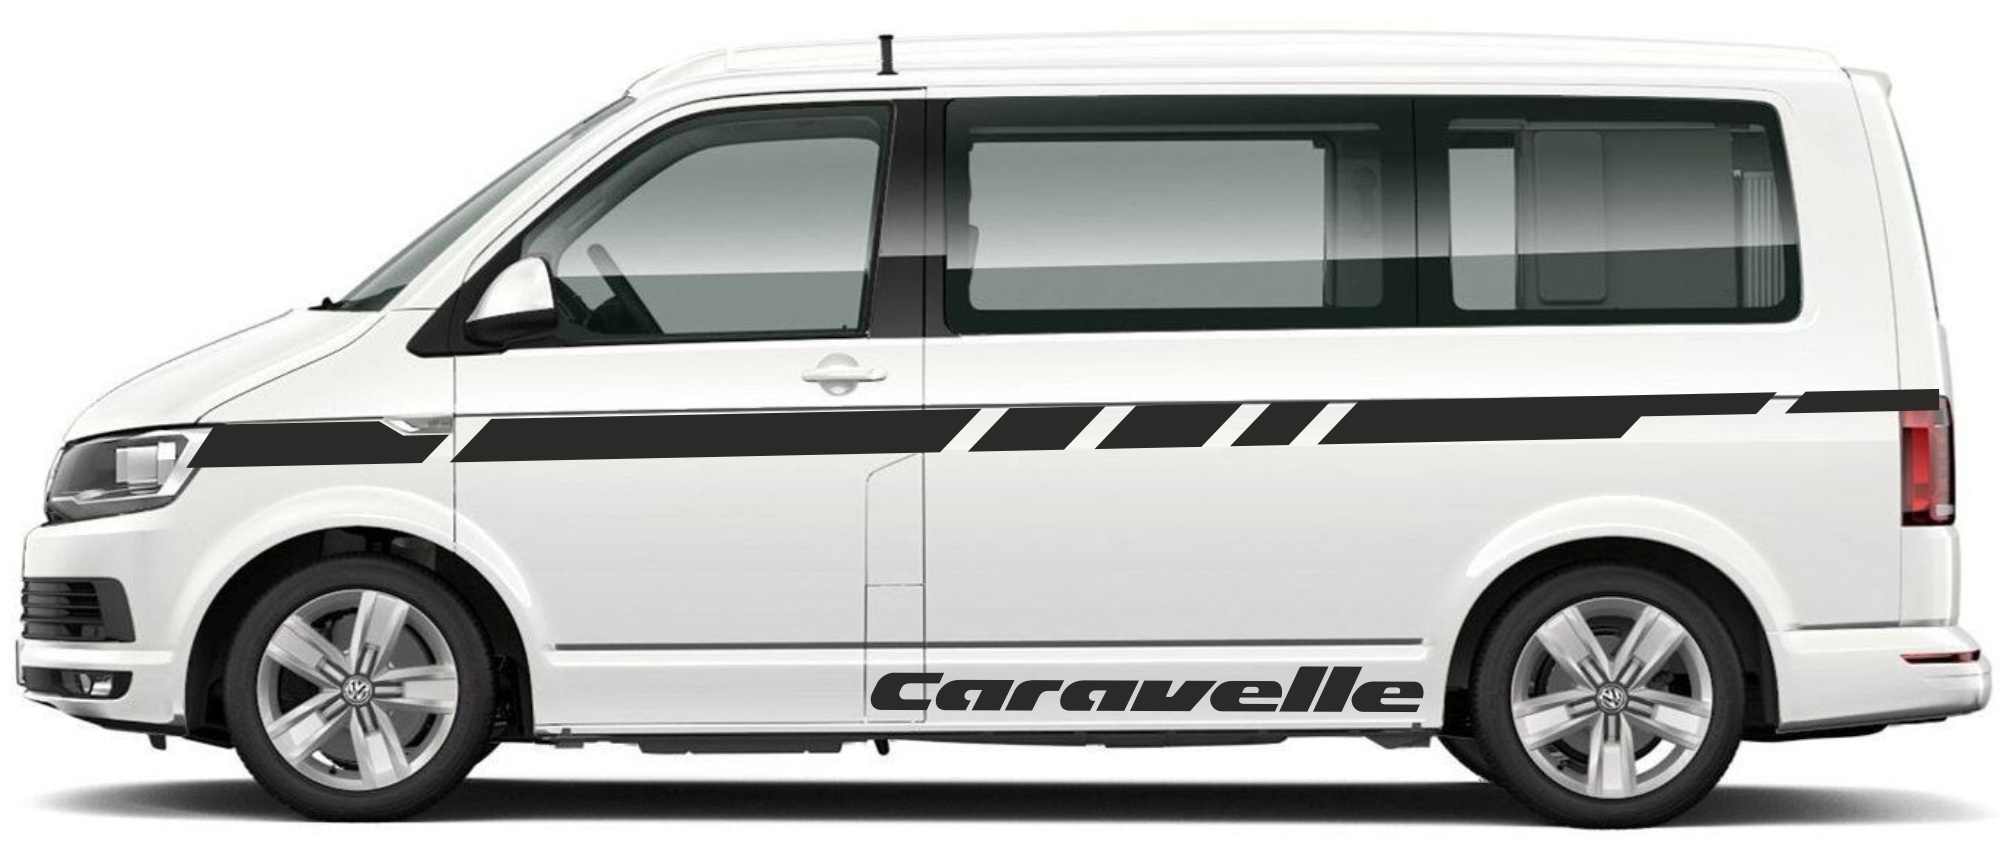 Naklejki VW T5 T6 Transporter pasy na boki long naklejki decals stripes sticker aufkleber nalepky samolepky tuning